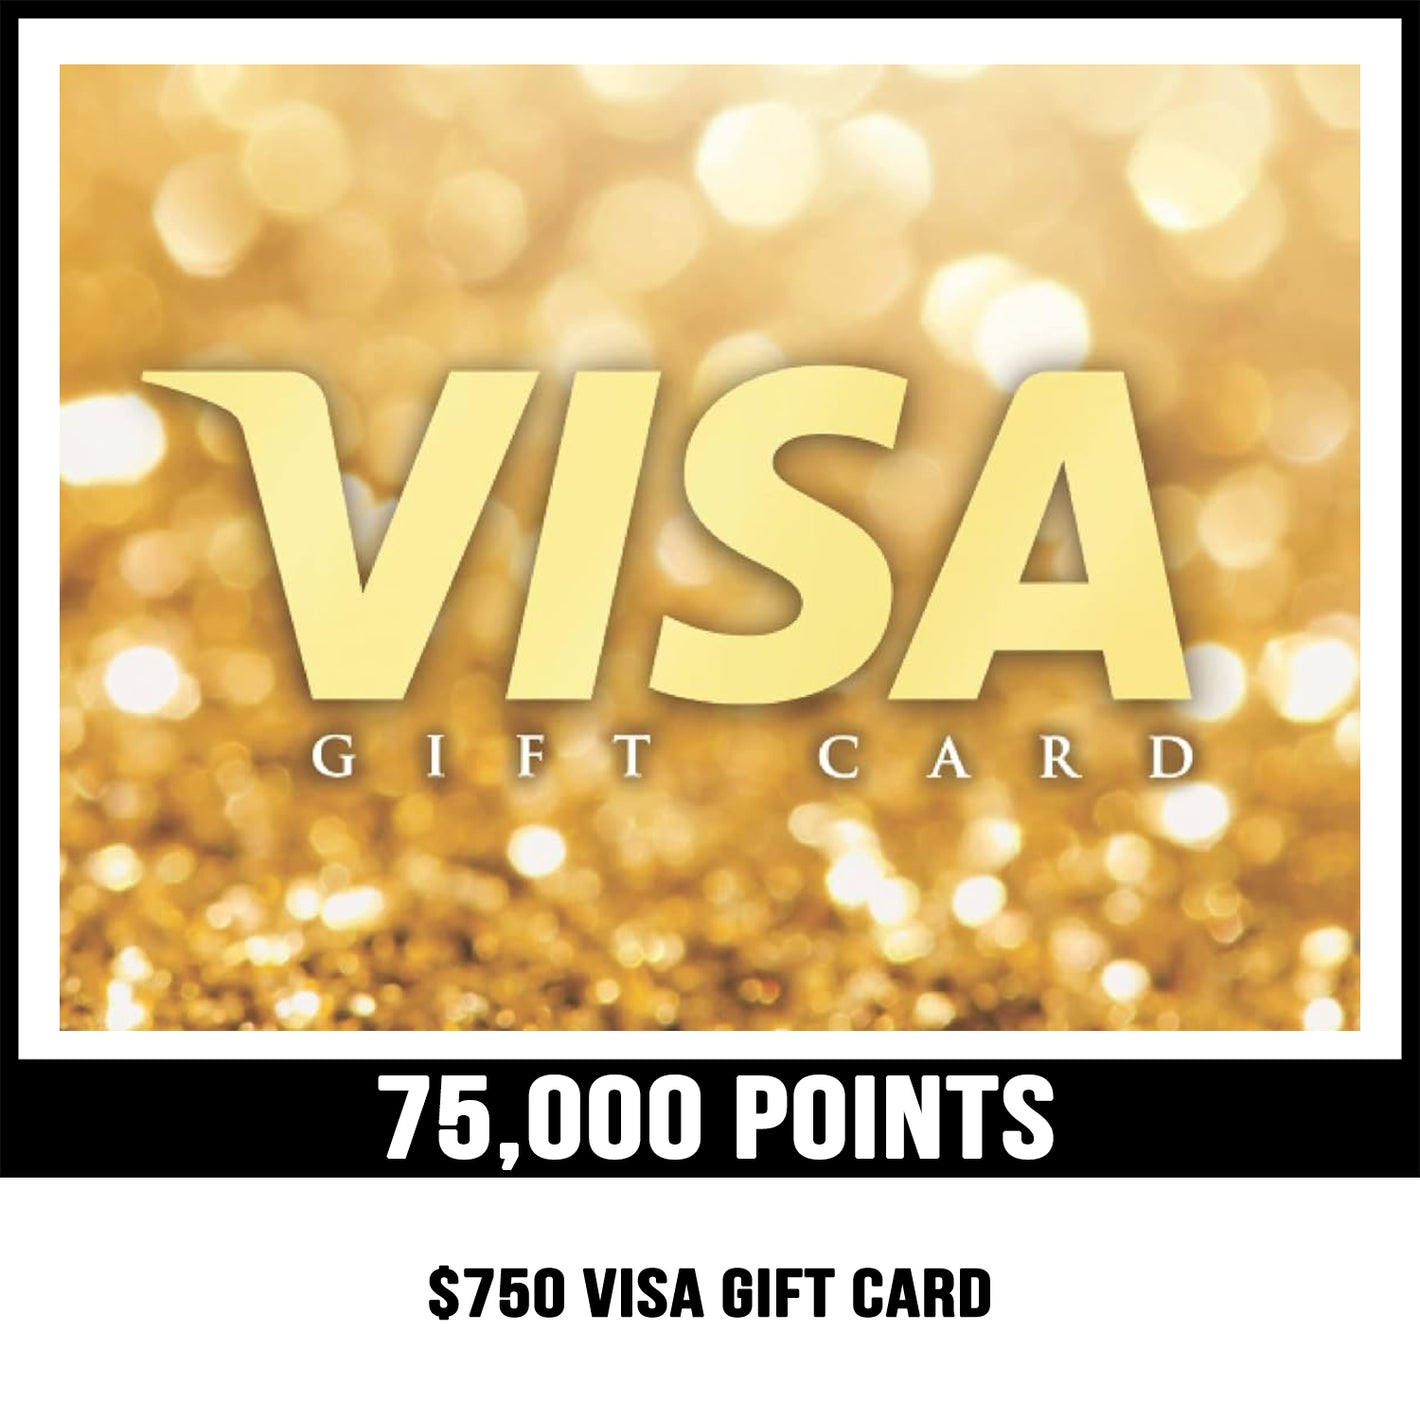 $750 Visa gift card prize for 75000 points